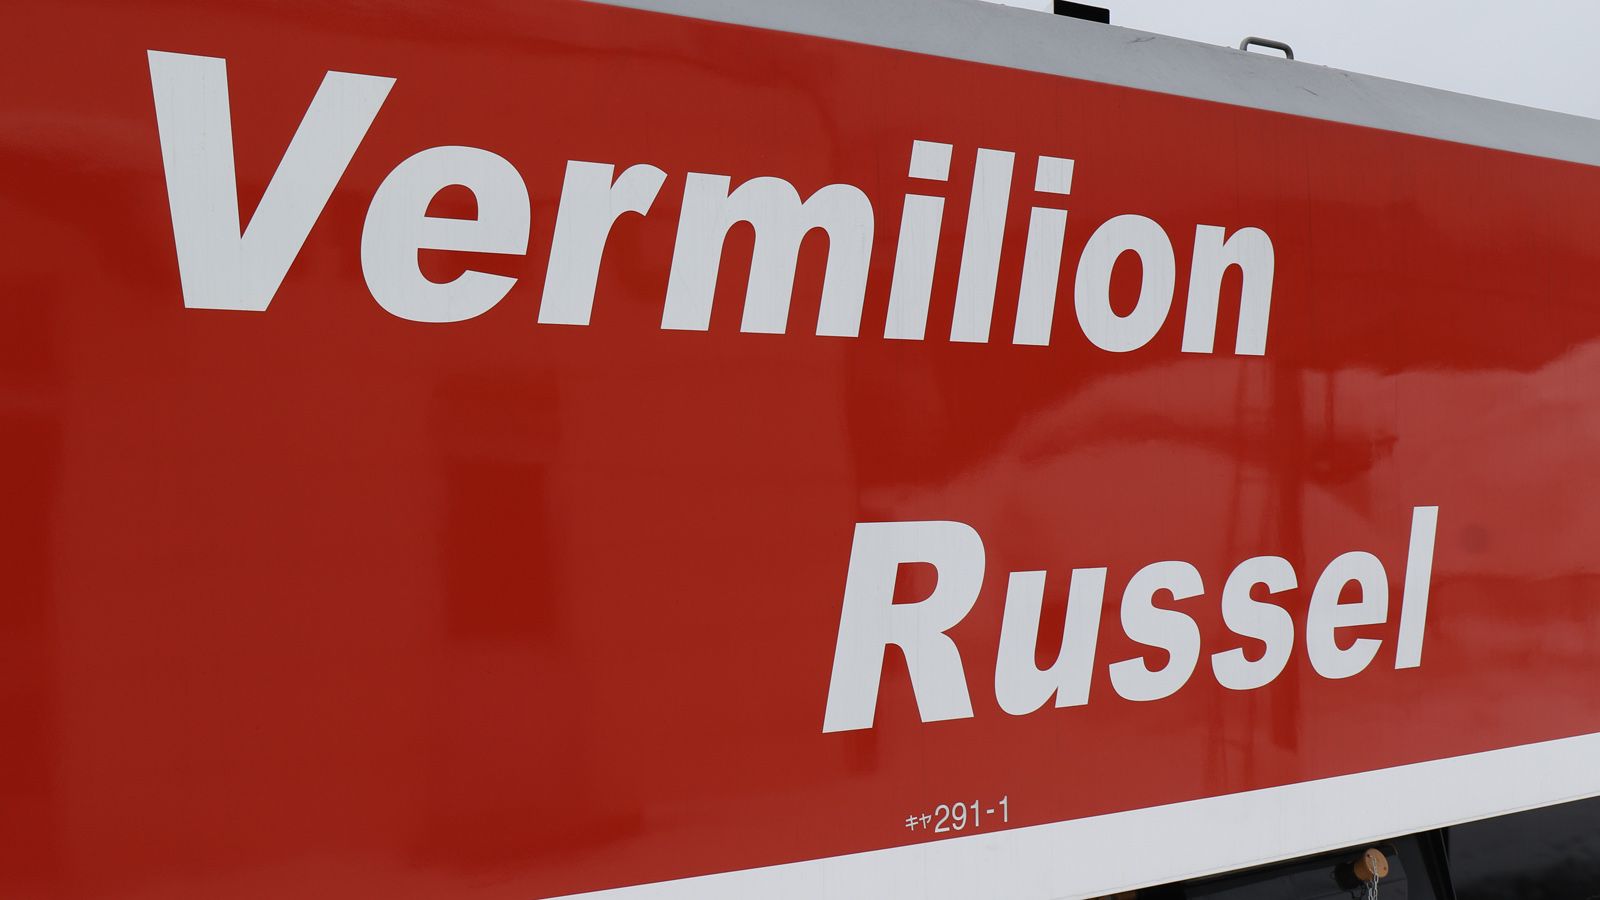 「Vermillion」は朱色の意味。文字通り「赤いラッセル車」だ（読者提供）